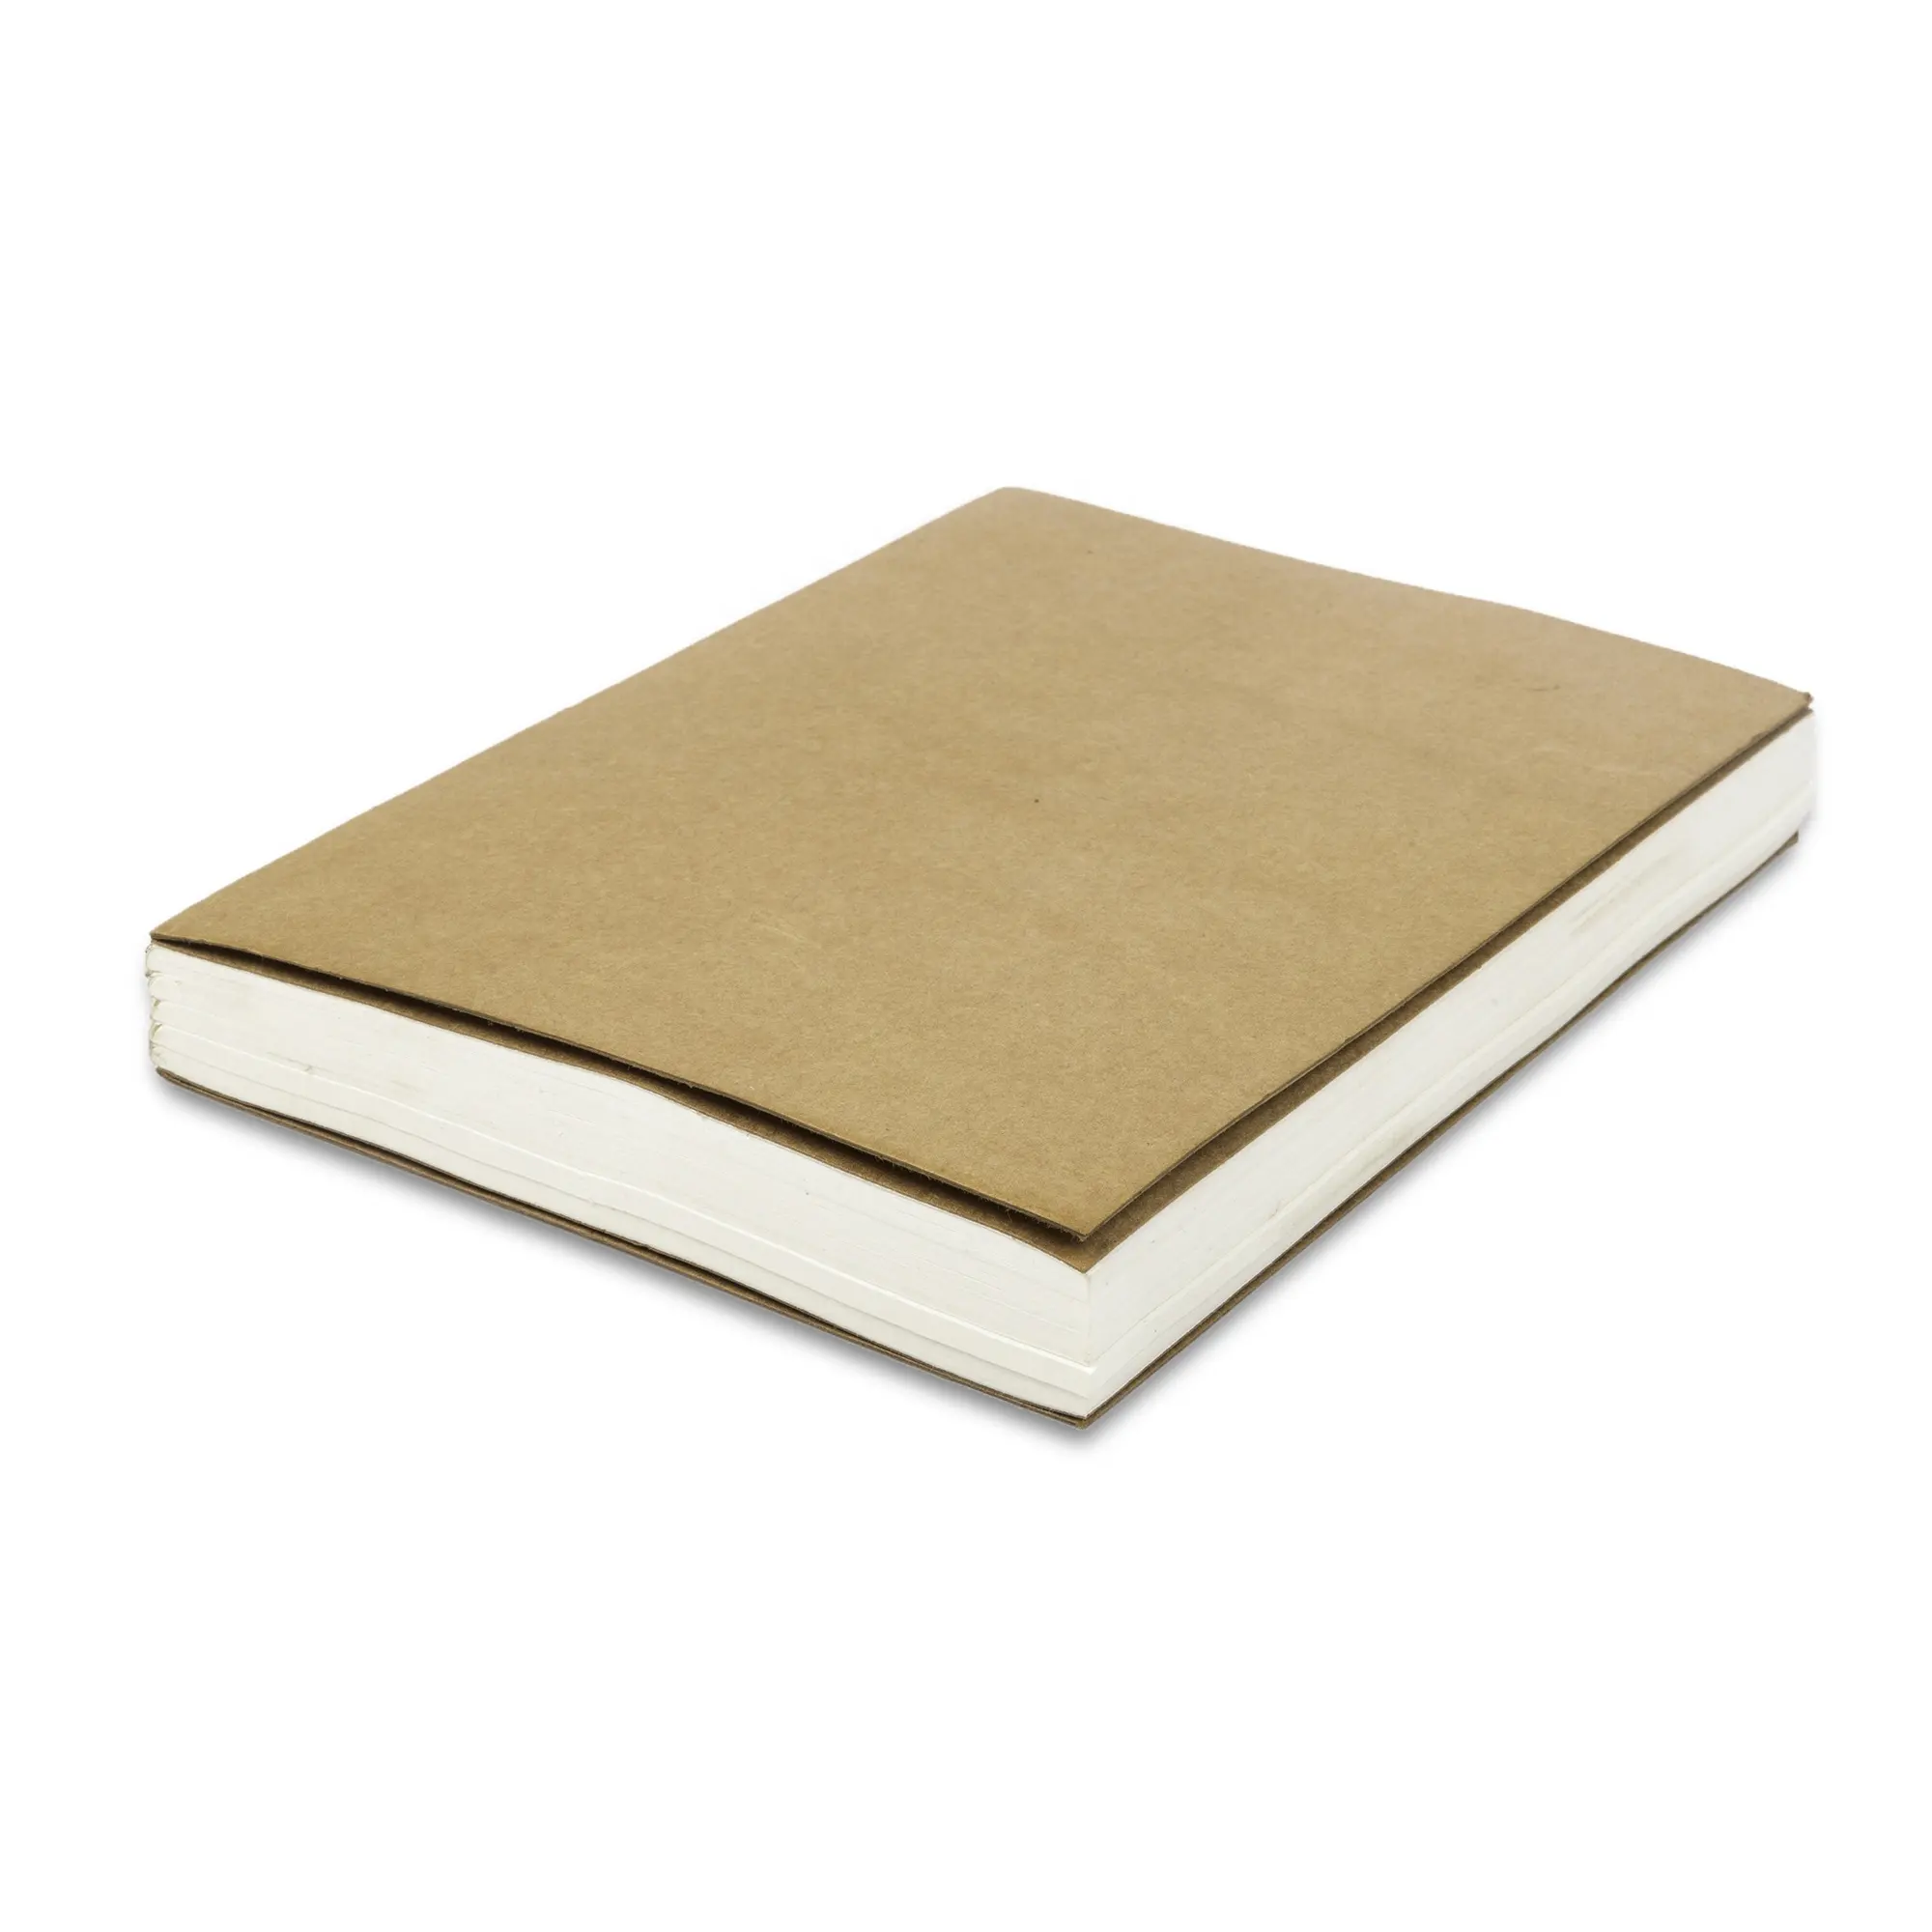 Isi ulang kertas katun buatan tangan untuk ukuran A5 kertas bergaris atau tidak bergaris untuk jurnal dan buku catatan atau isi ulang untuk jurnal kulit